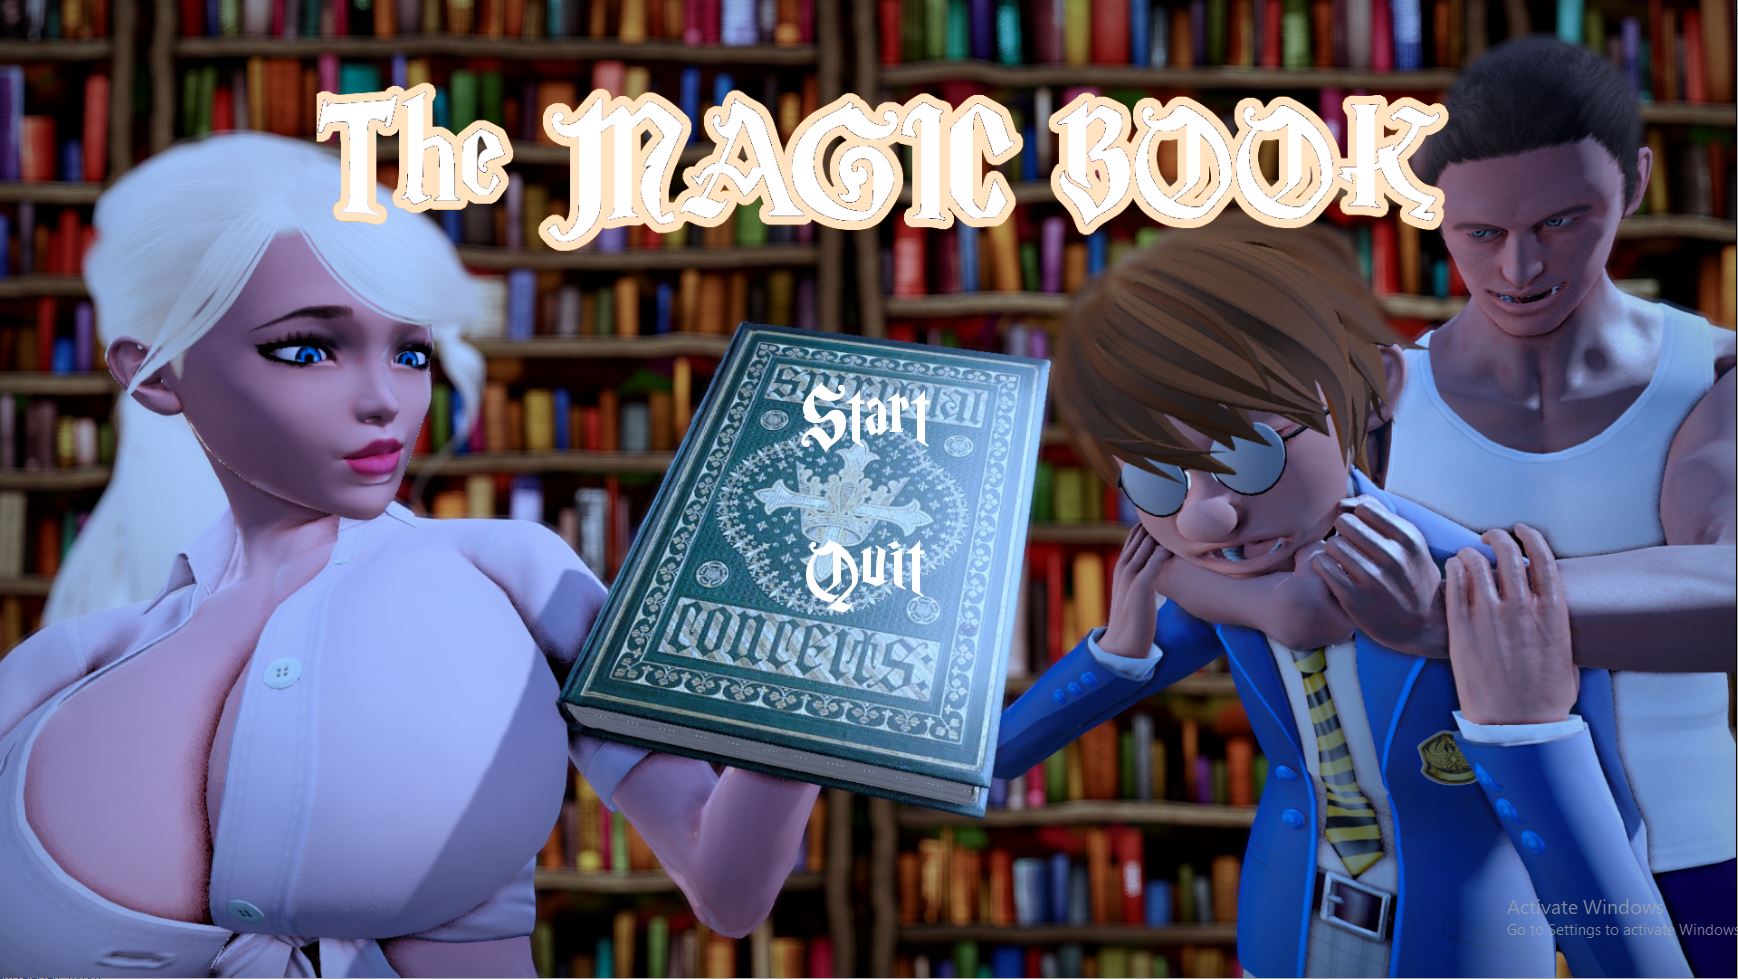 Magic book magics on lesbian xvideos